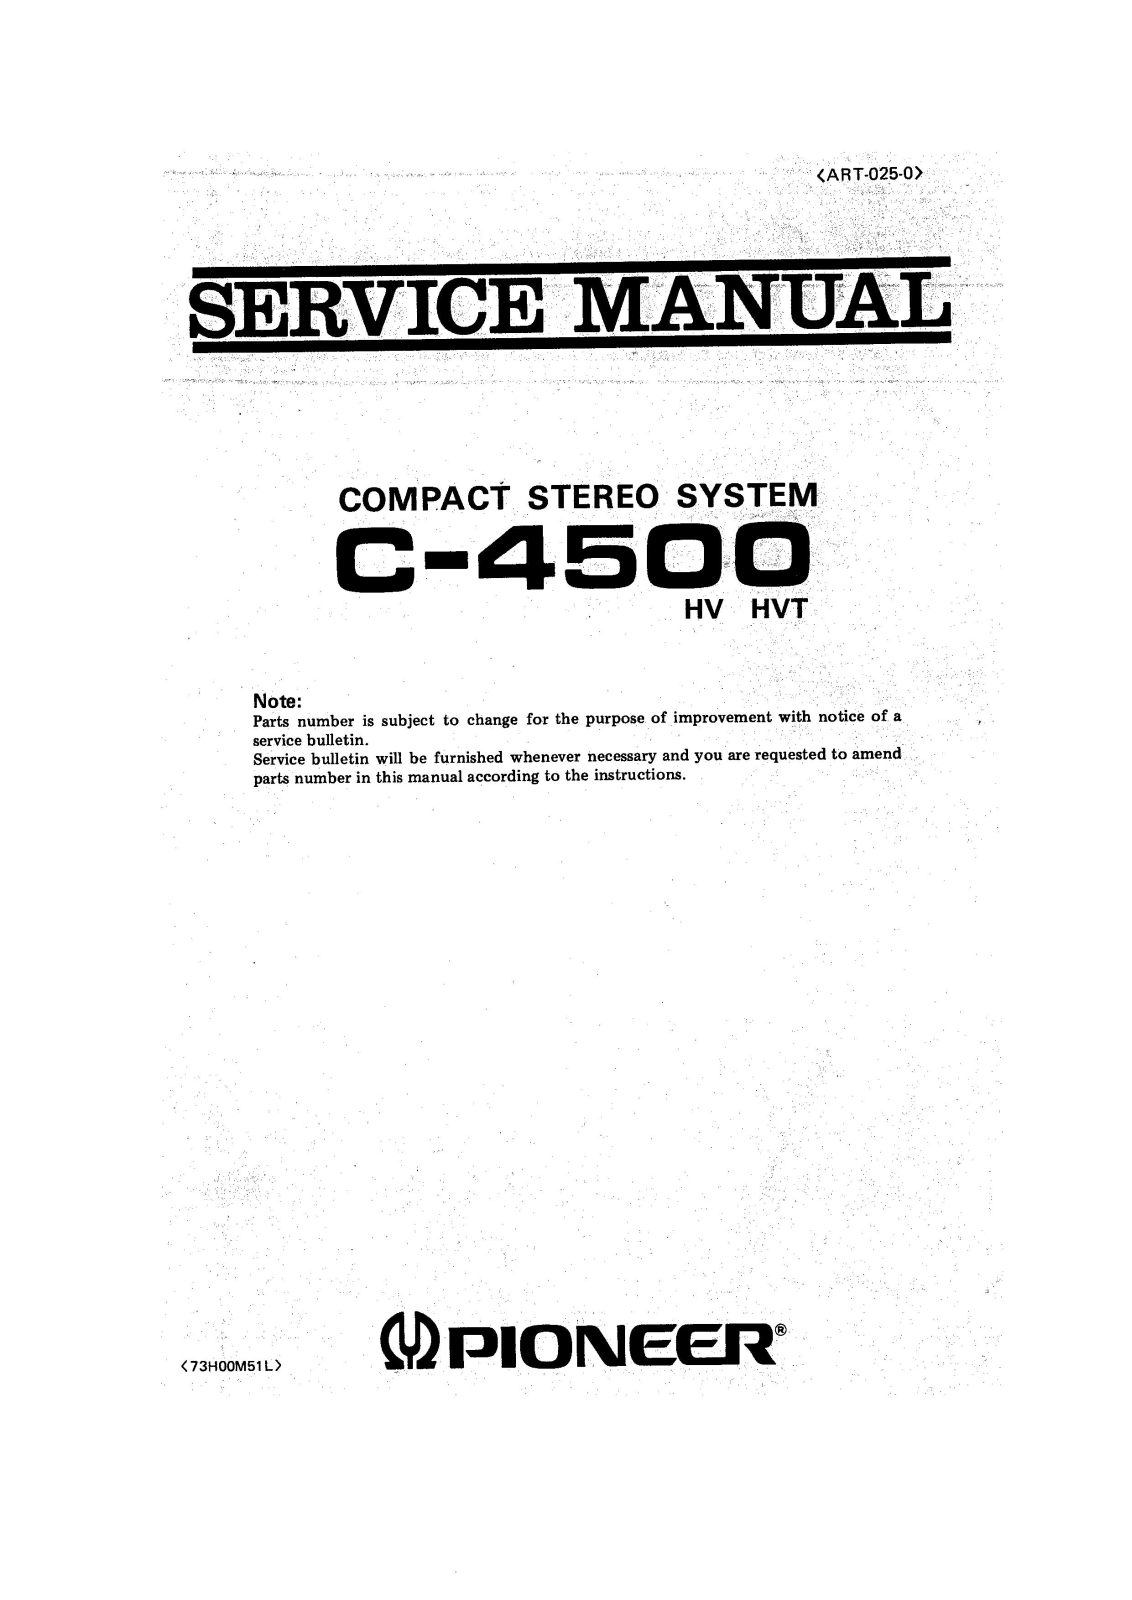 Pioneer C-4500 Service Manual